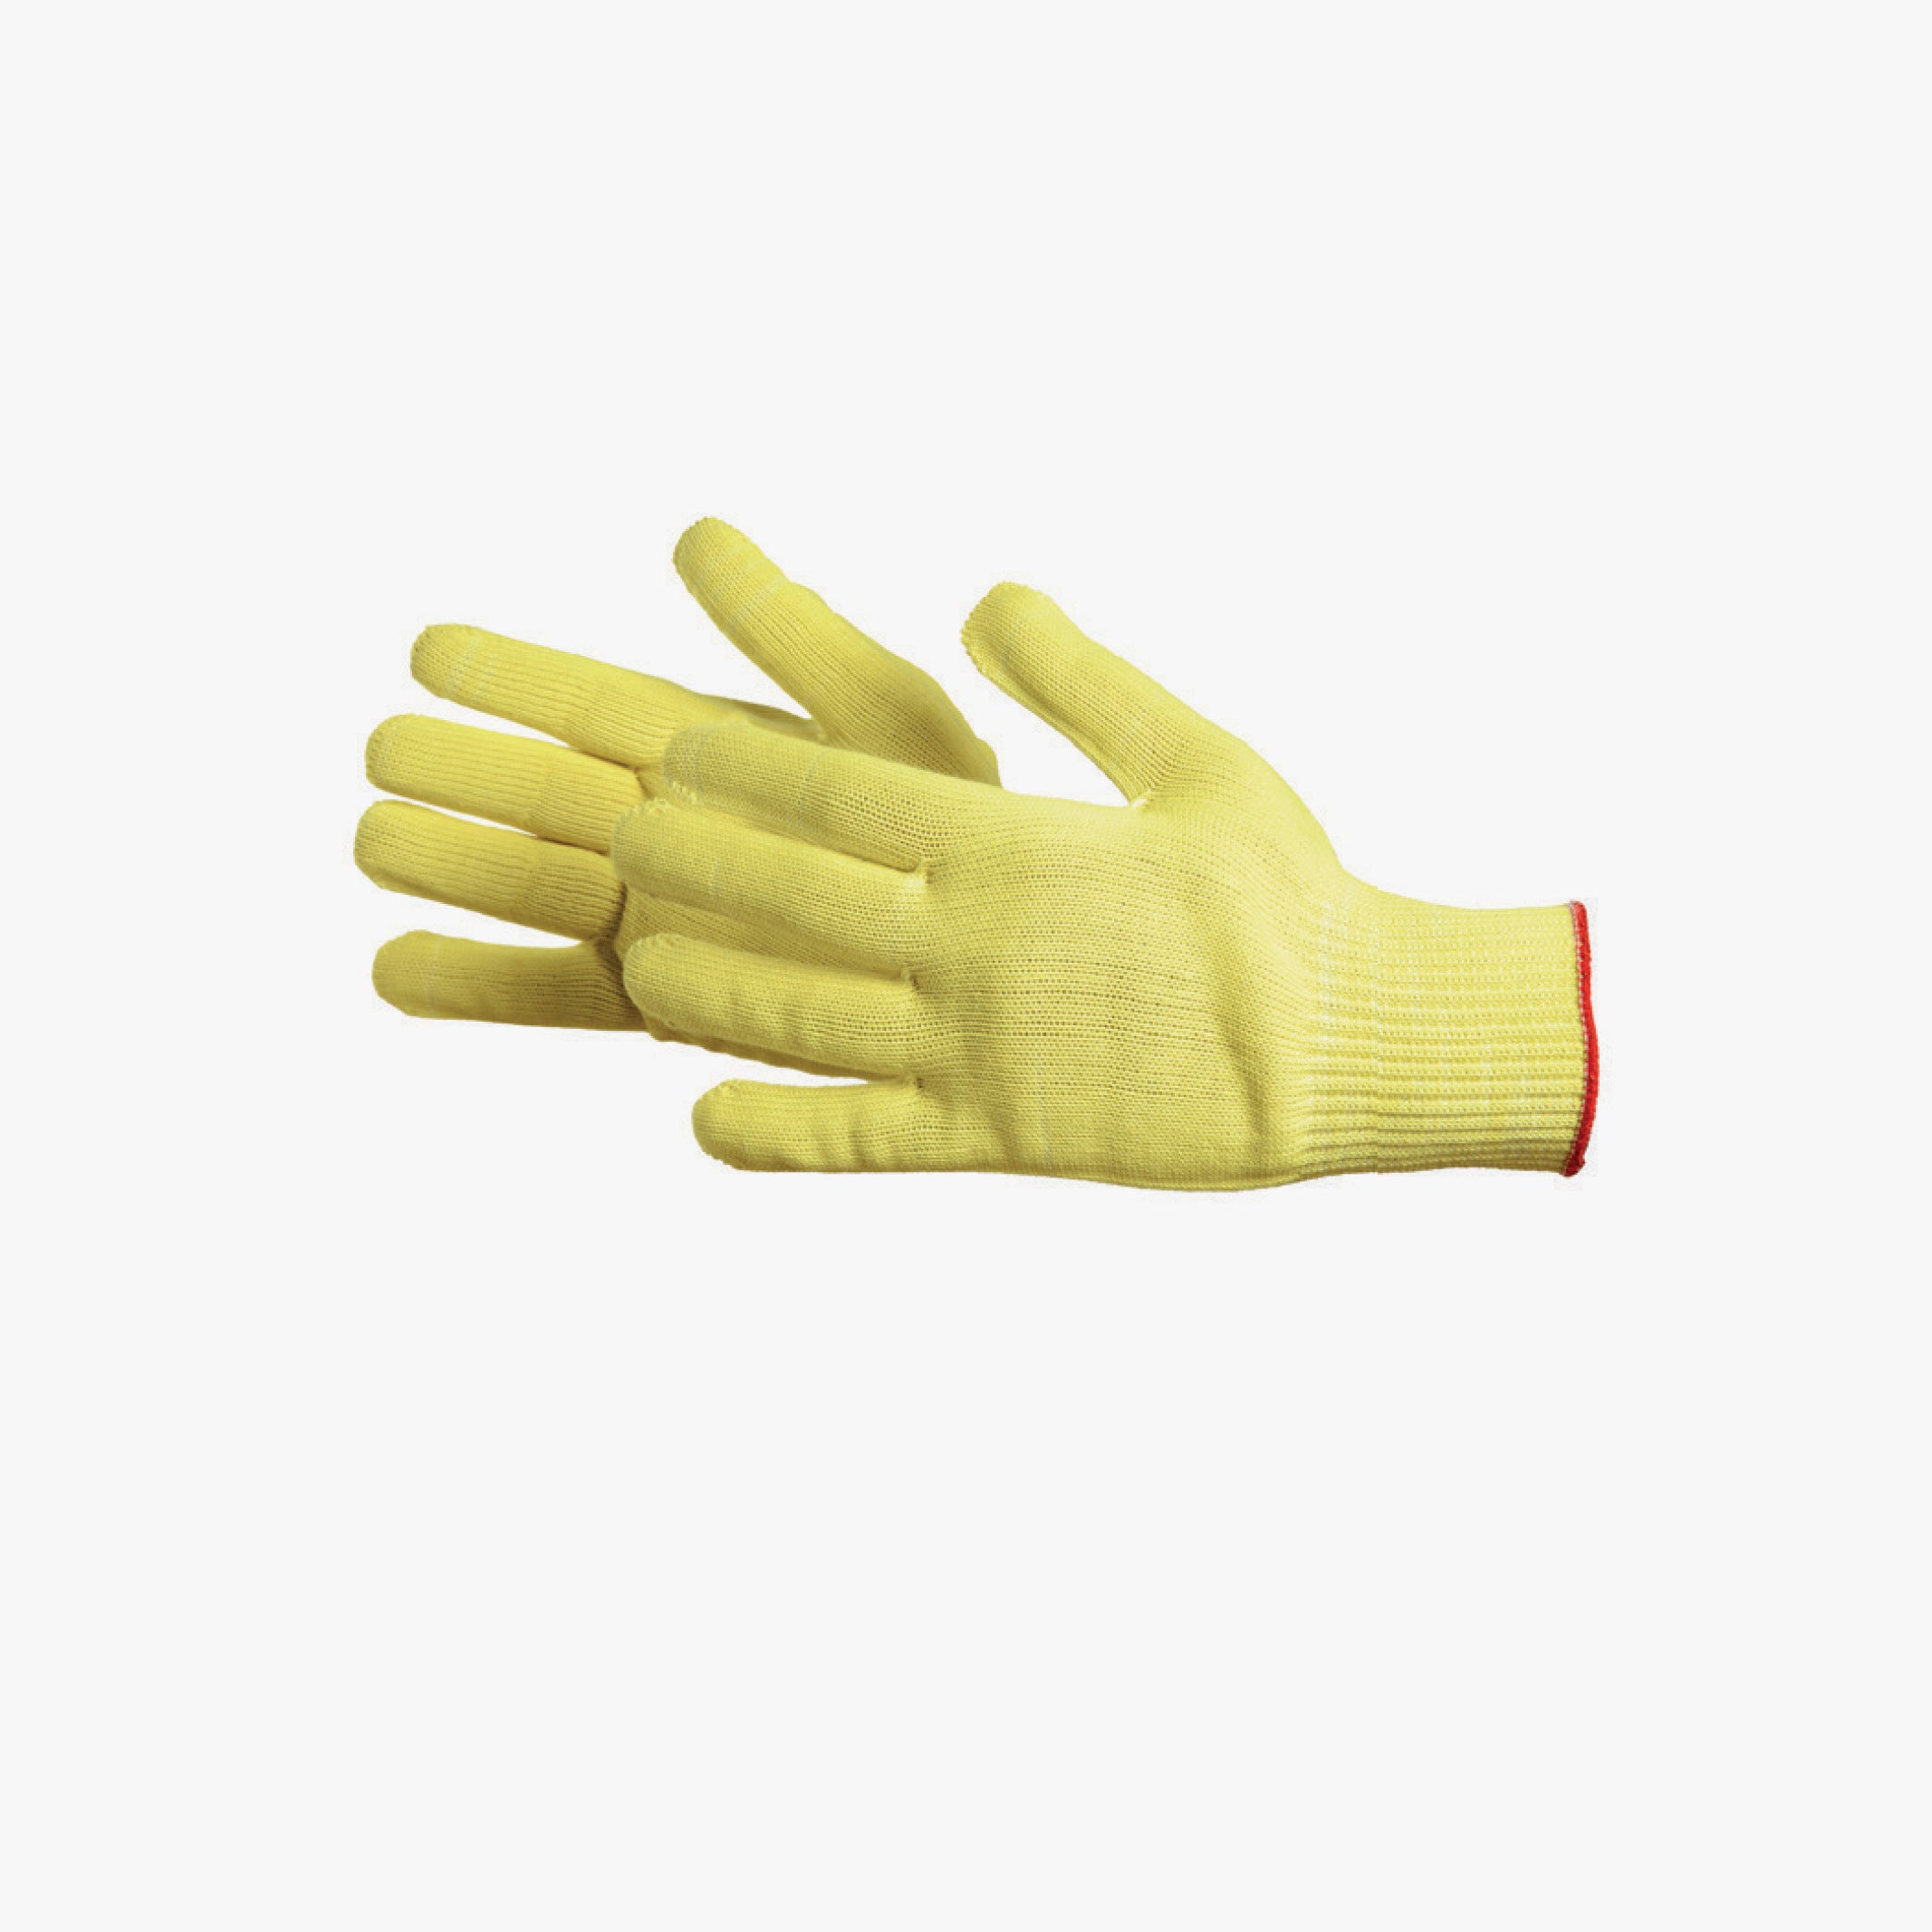 Kevlar gloves continuous thread 5069 - 10pcs